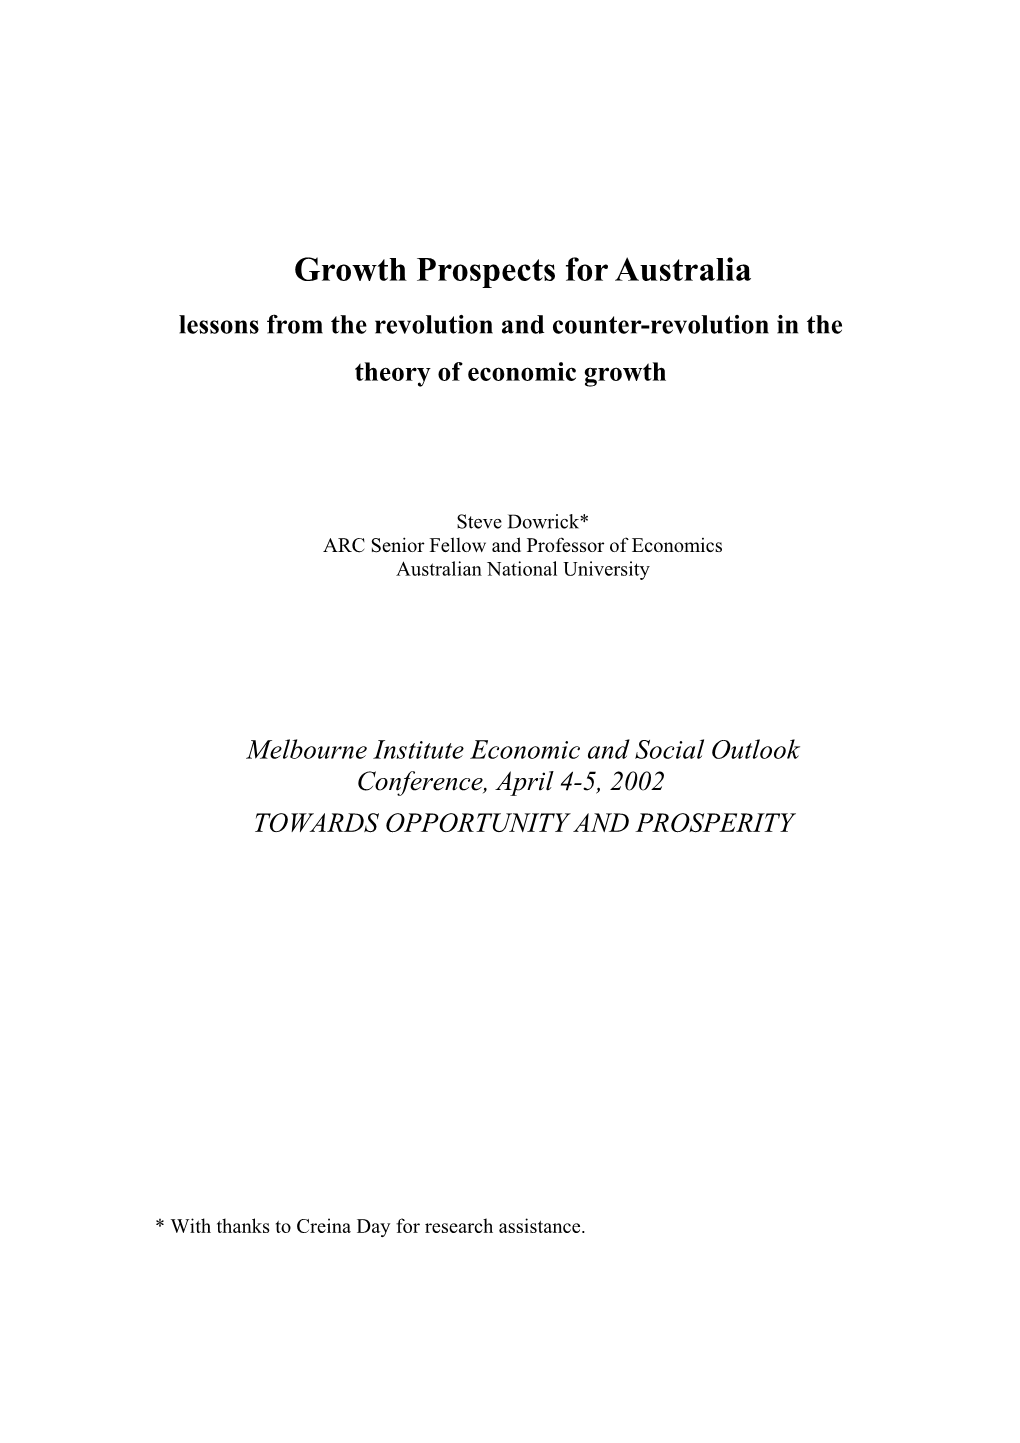 Australia's Growth Prospects